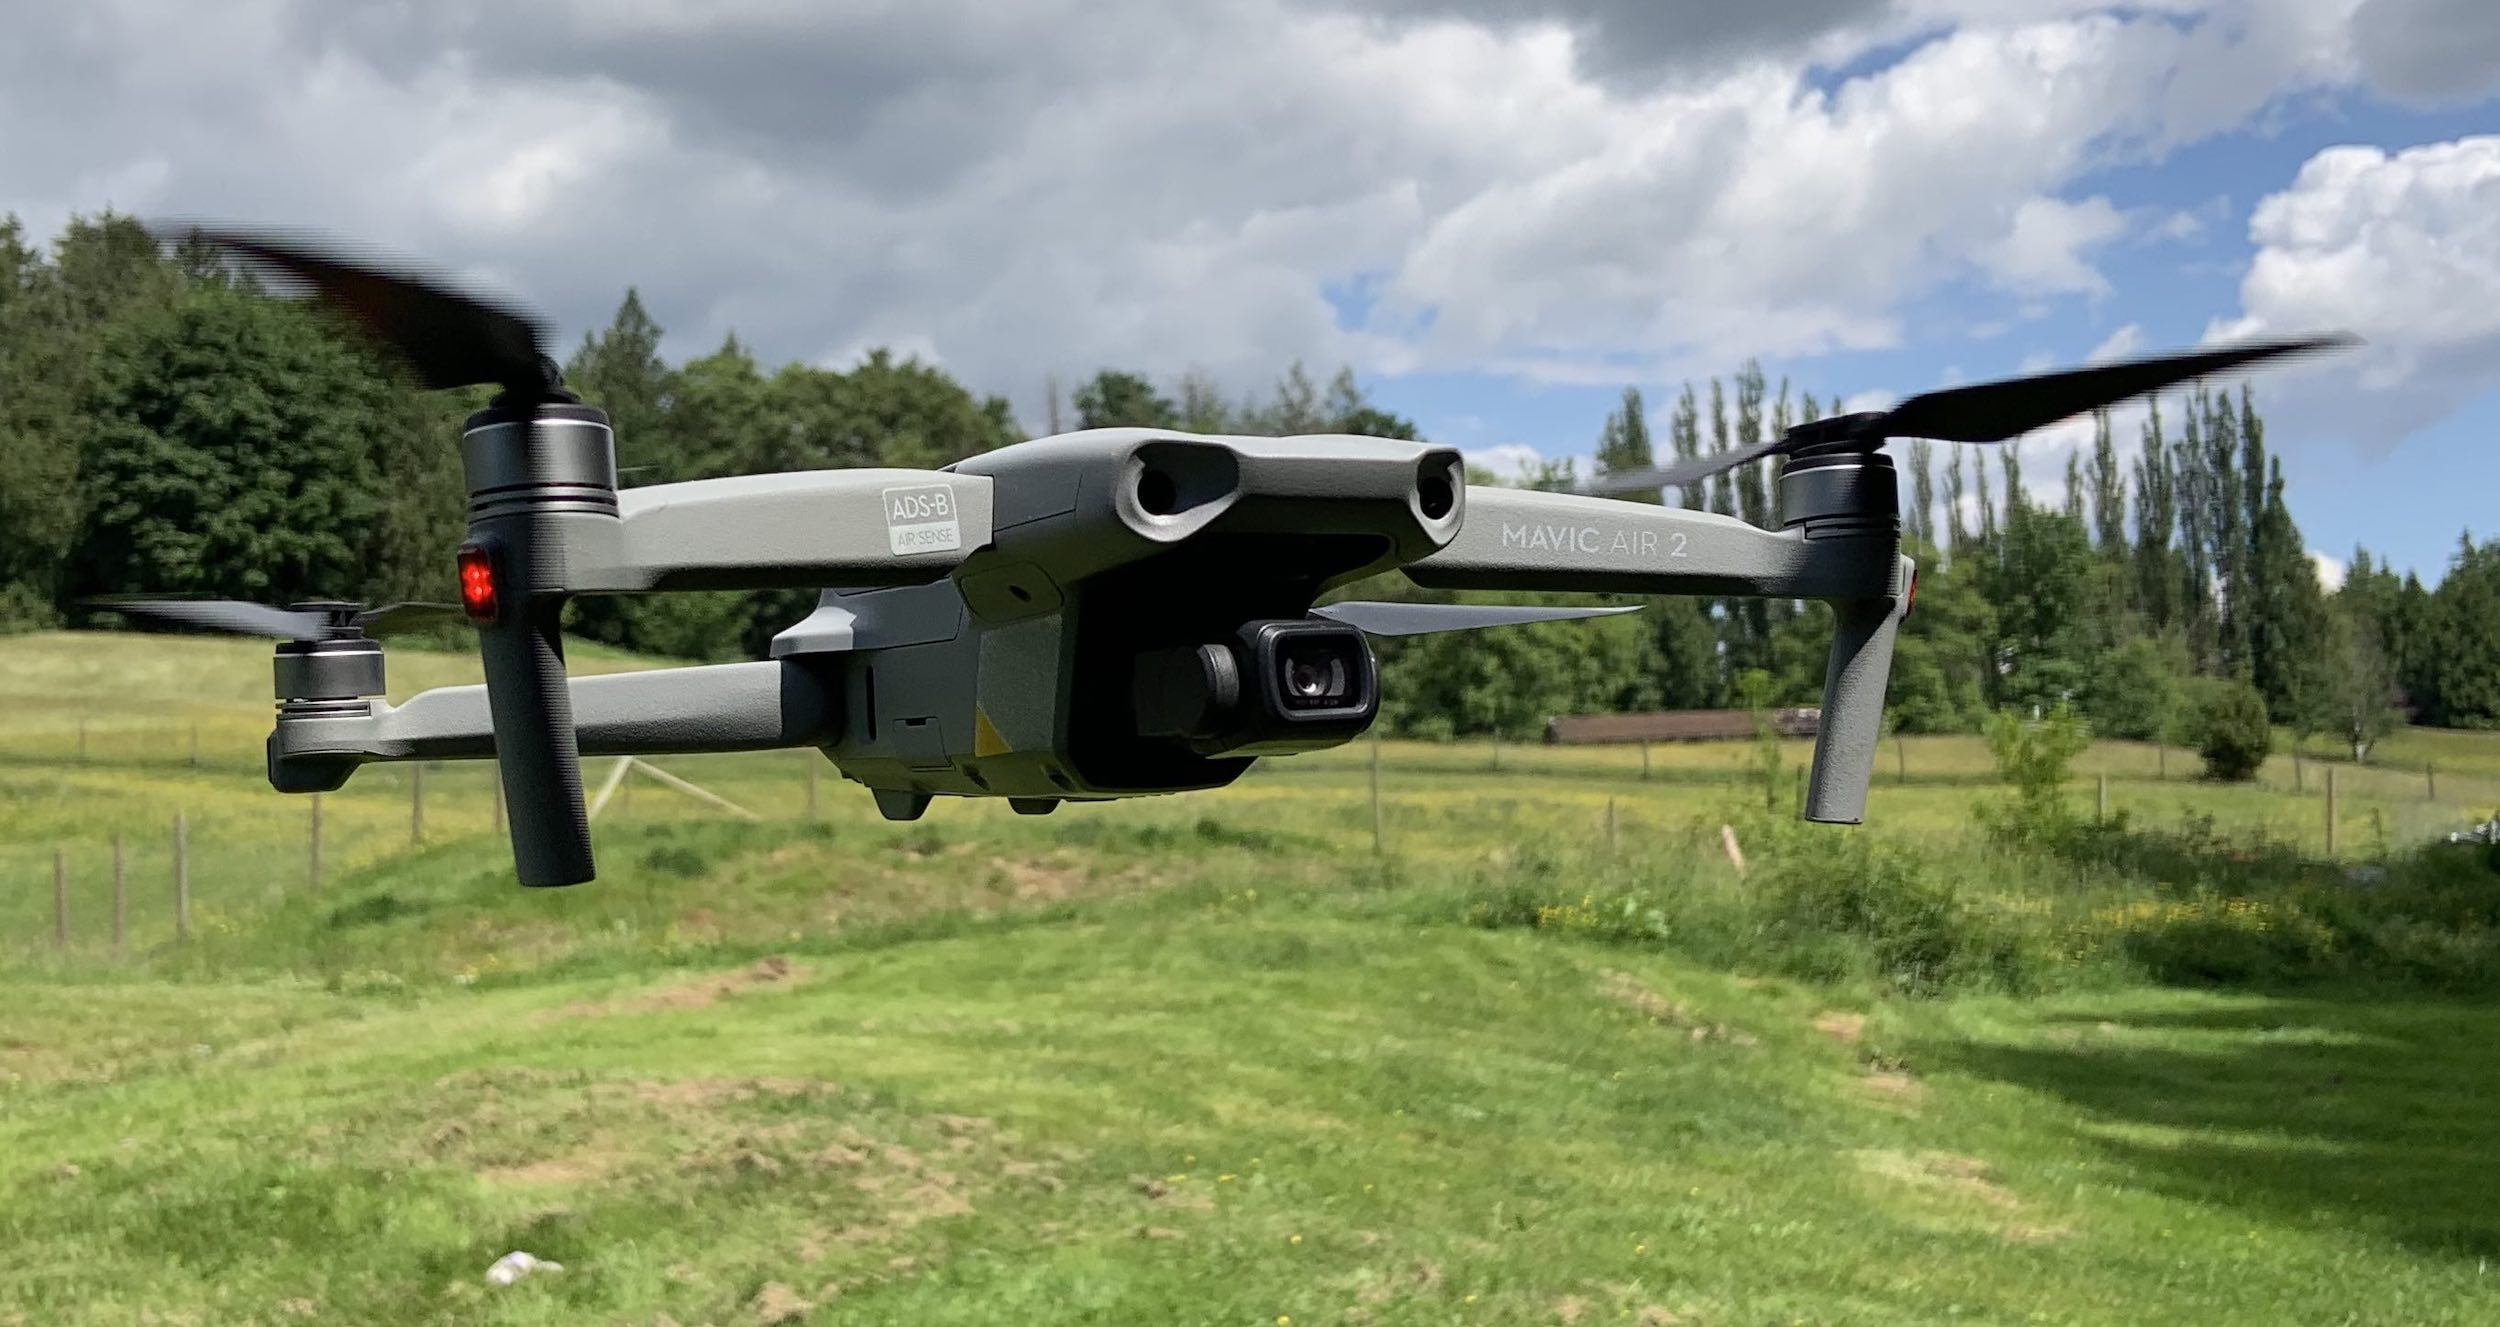 DJI Mavic Air 2 Quadcopter Drone Review | Best Buy Blog